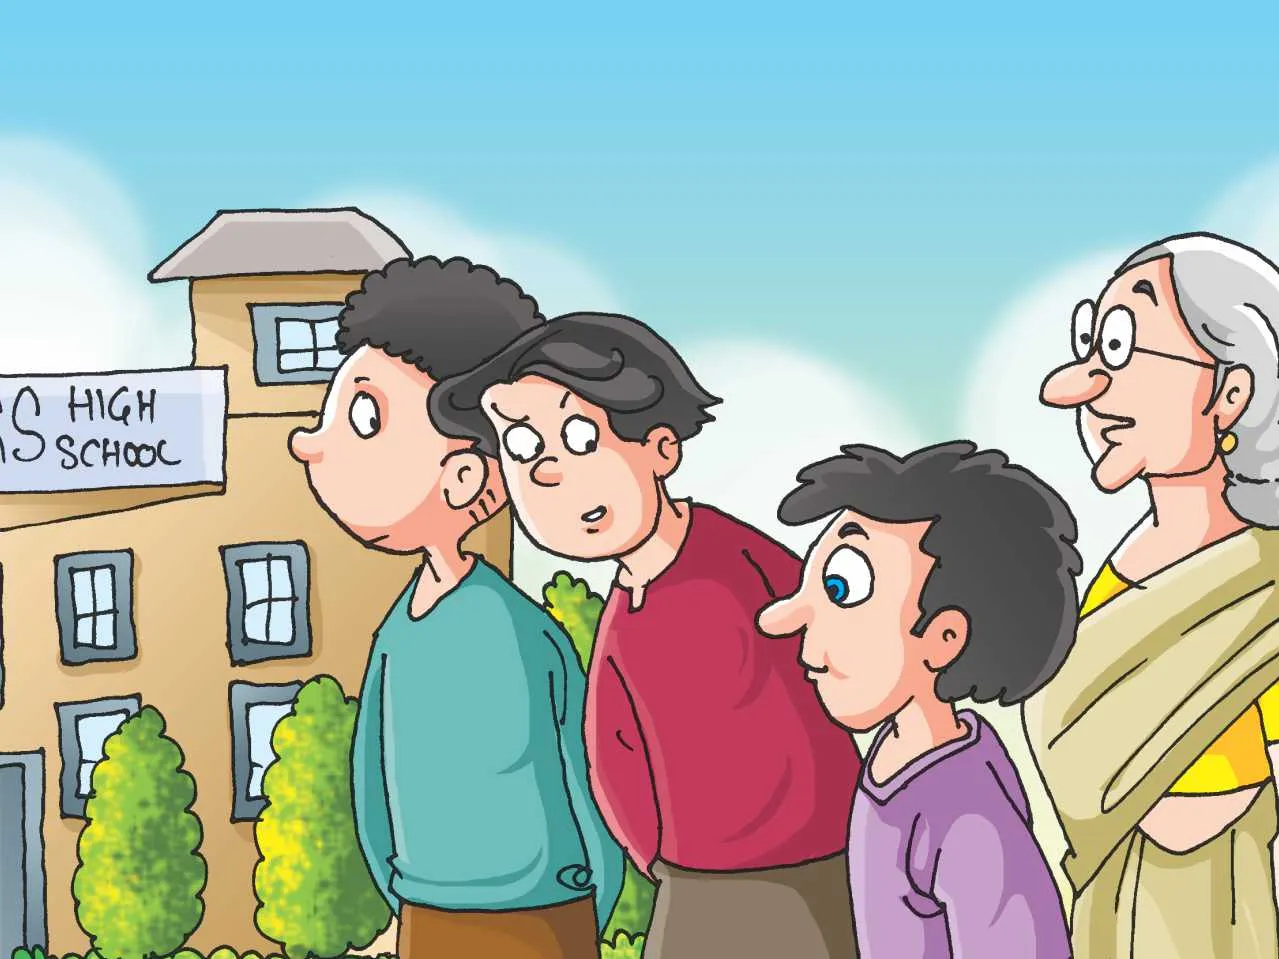 Three kids with old woman otside school cartoon image